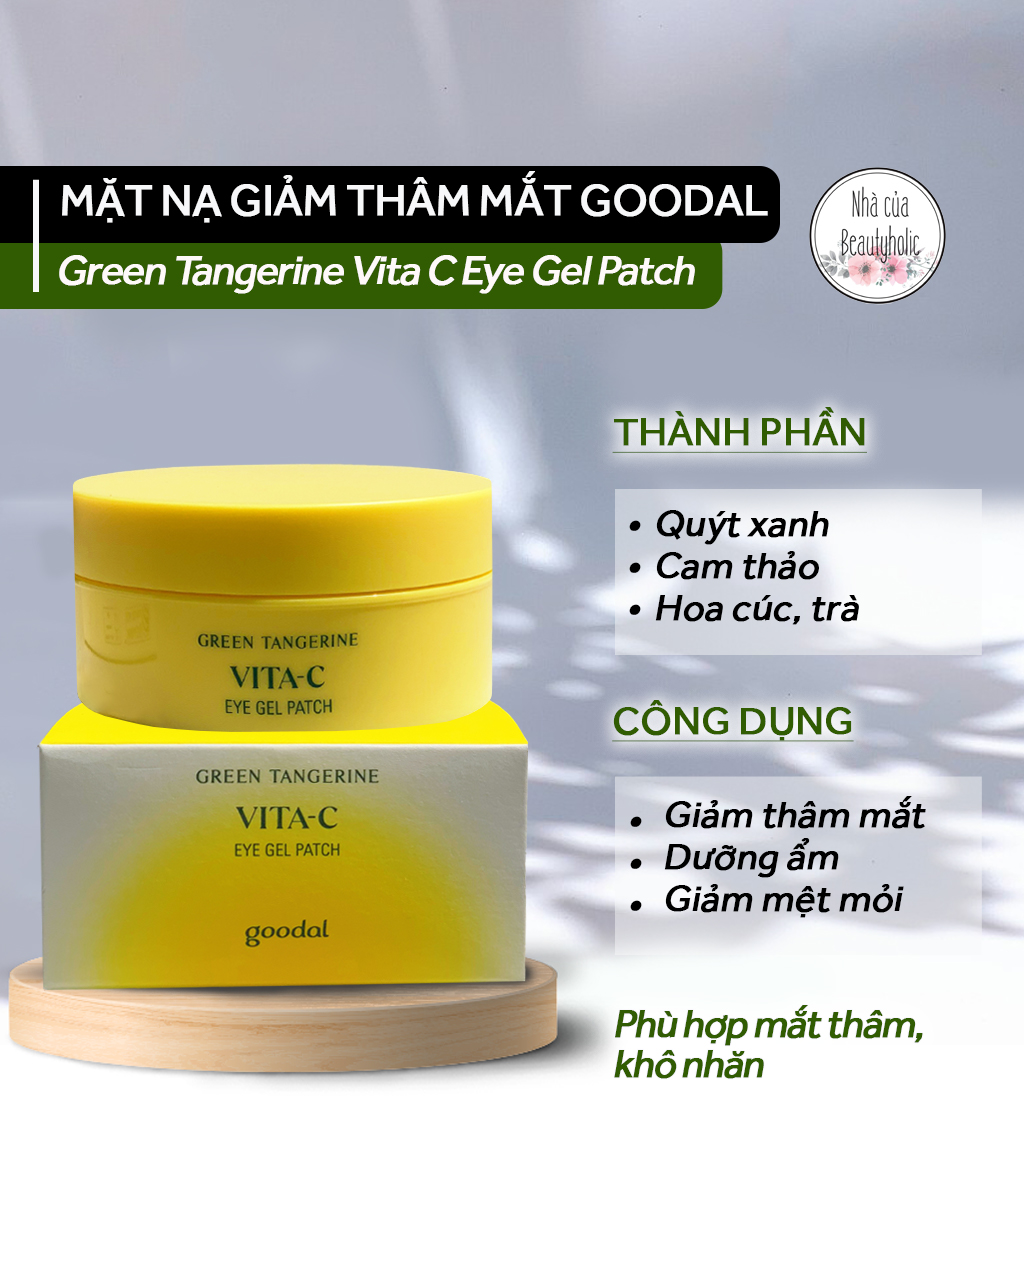 [HCM][Nhacuabeautyholic] MẶT NẠ MẮT GOODAL Green Tangerine Vita C Eye Gel Patch